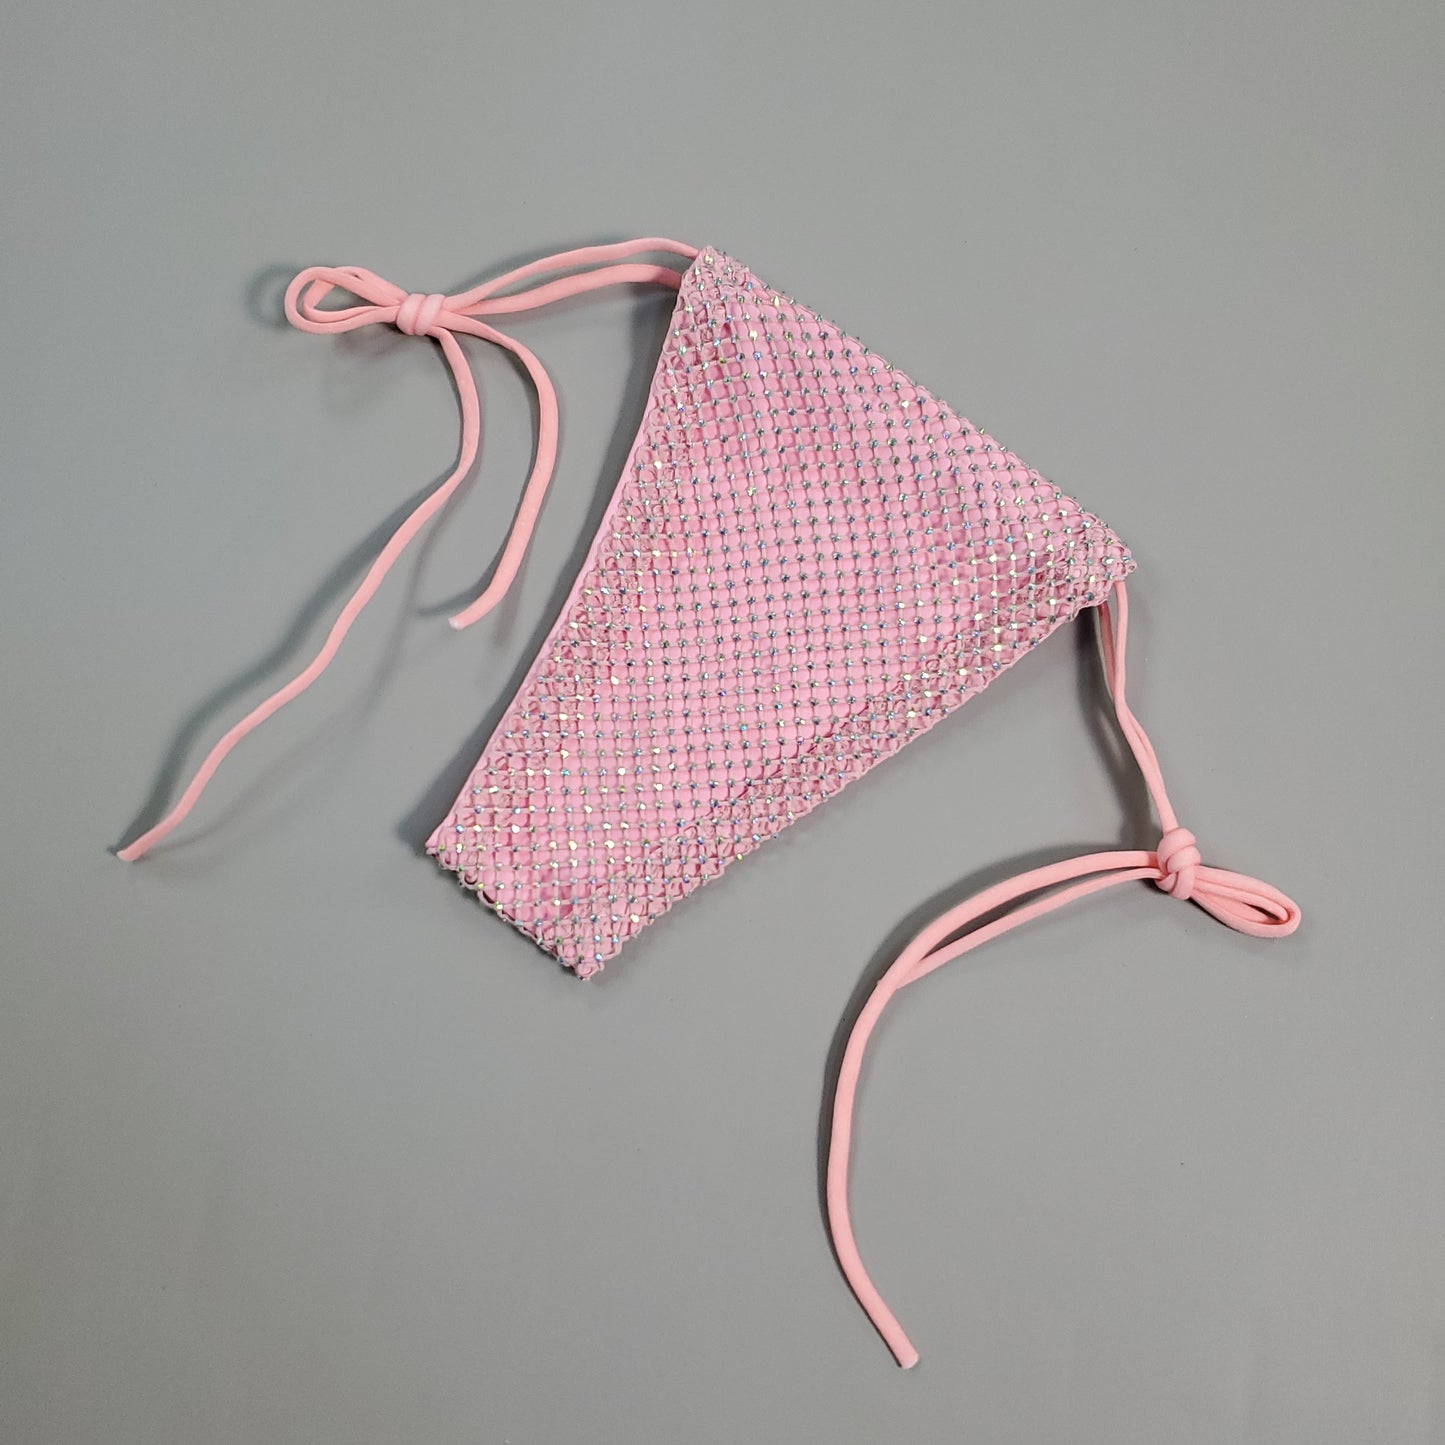 NEVA NUDE Shiney Hiney Iridescent Pink Crystal High Waisted Pantie Lingerie JBOT-PIN-NKM (New)